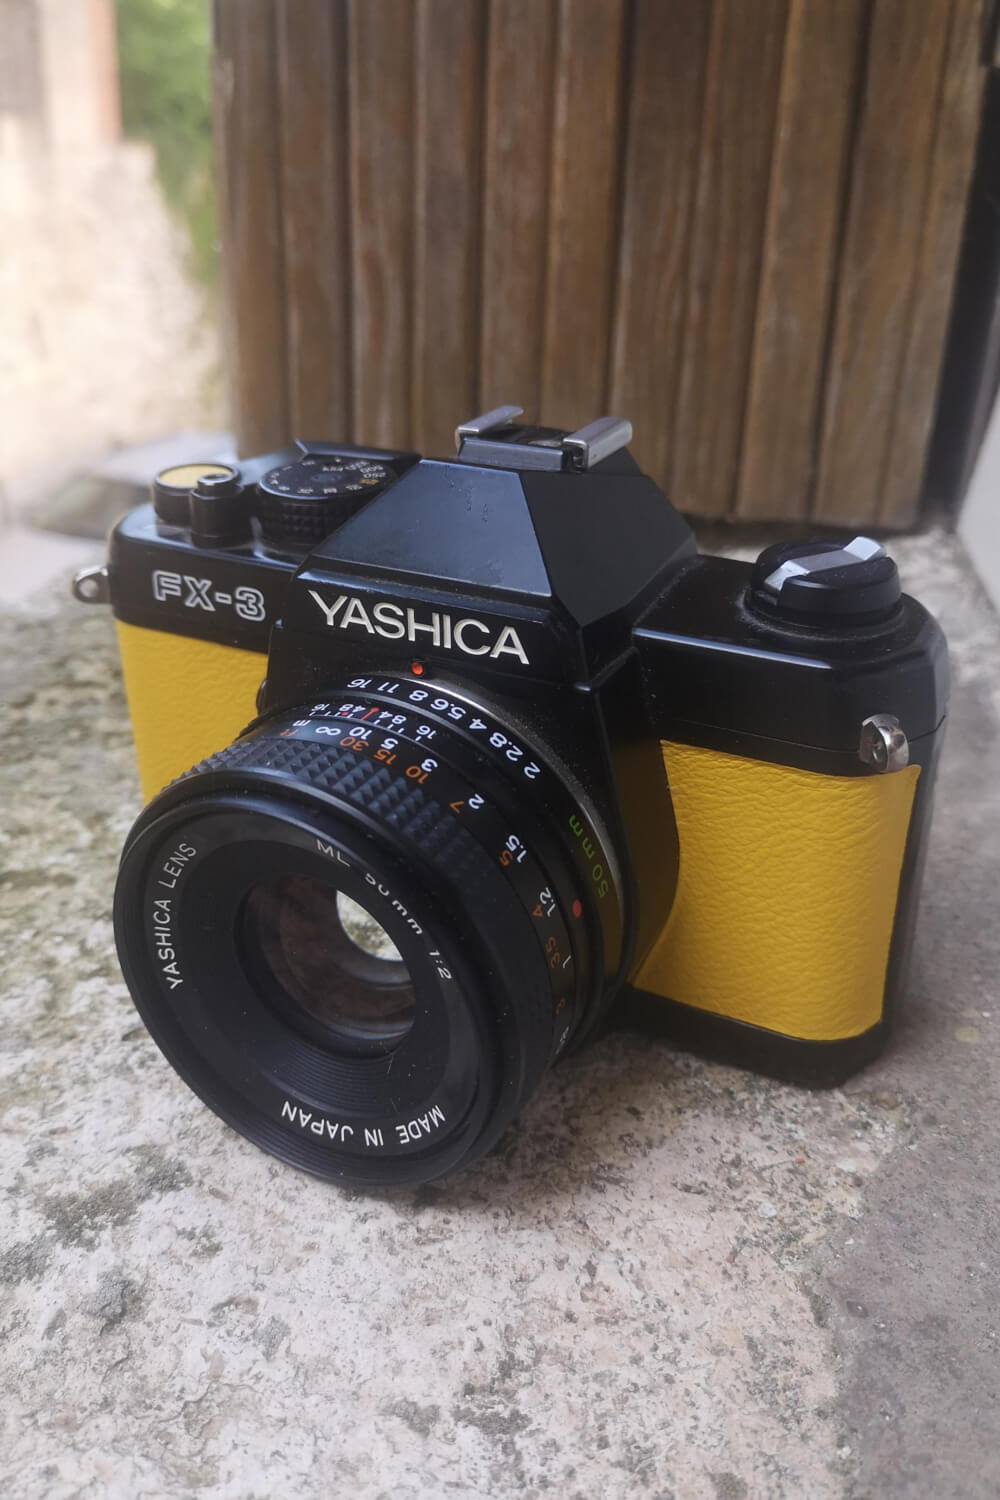 My Yashica FX - 3 + Yashica Lens ML 50mm f/2, Steven Munday